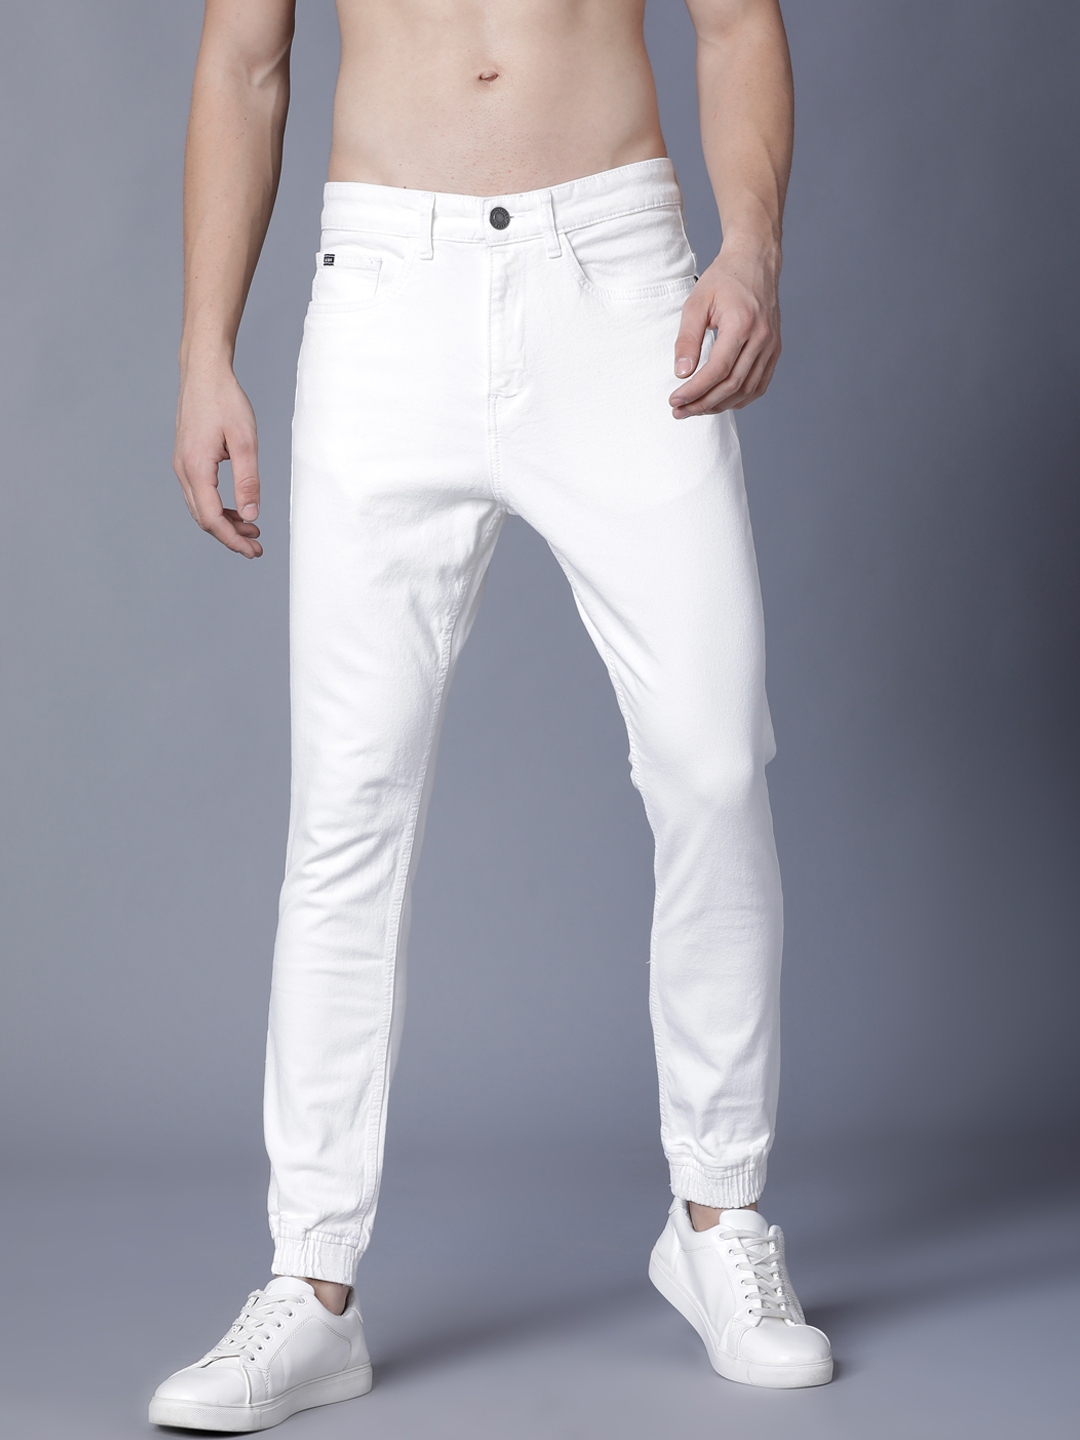 white jogger jeans